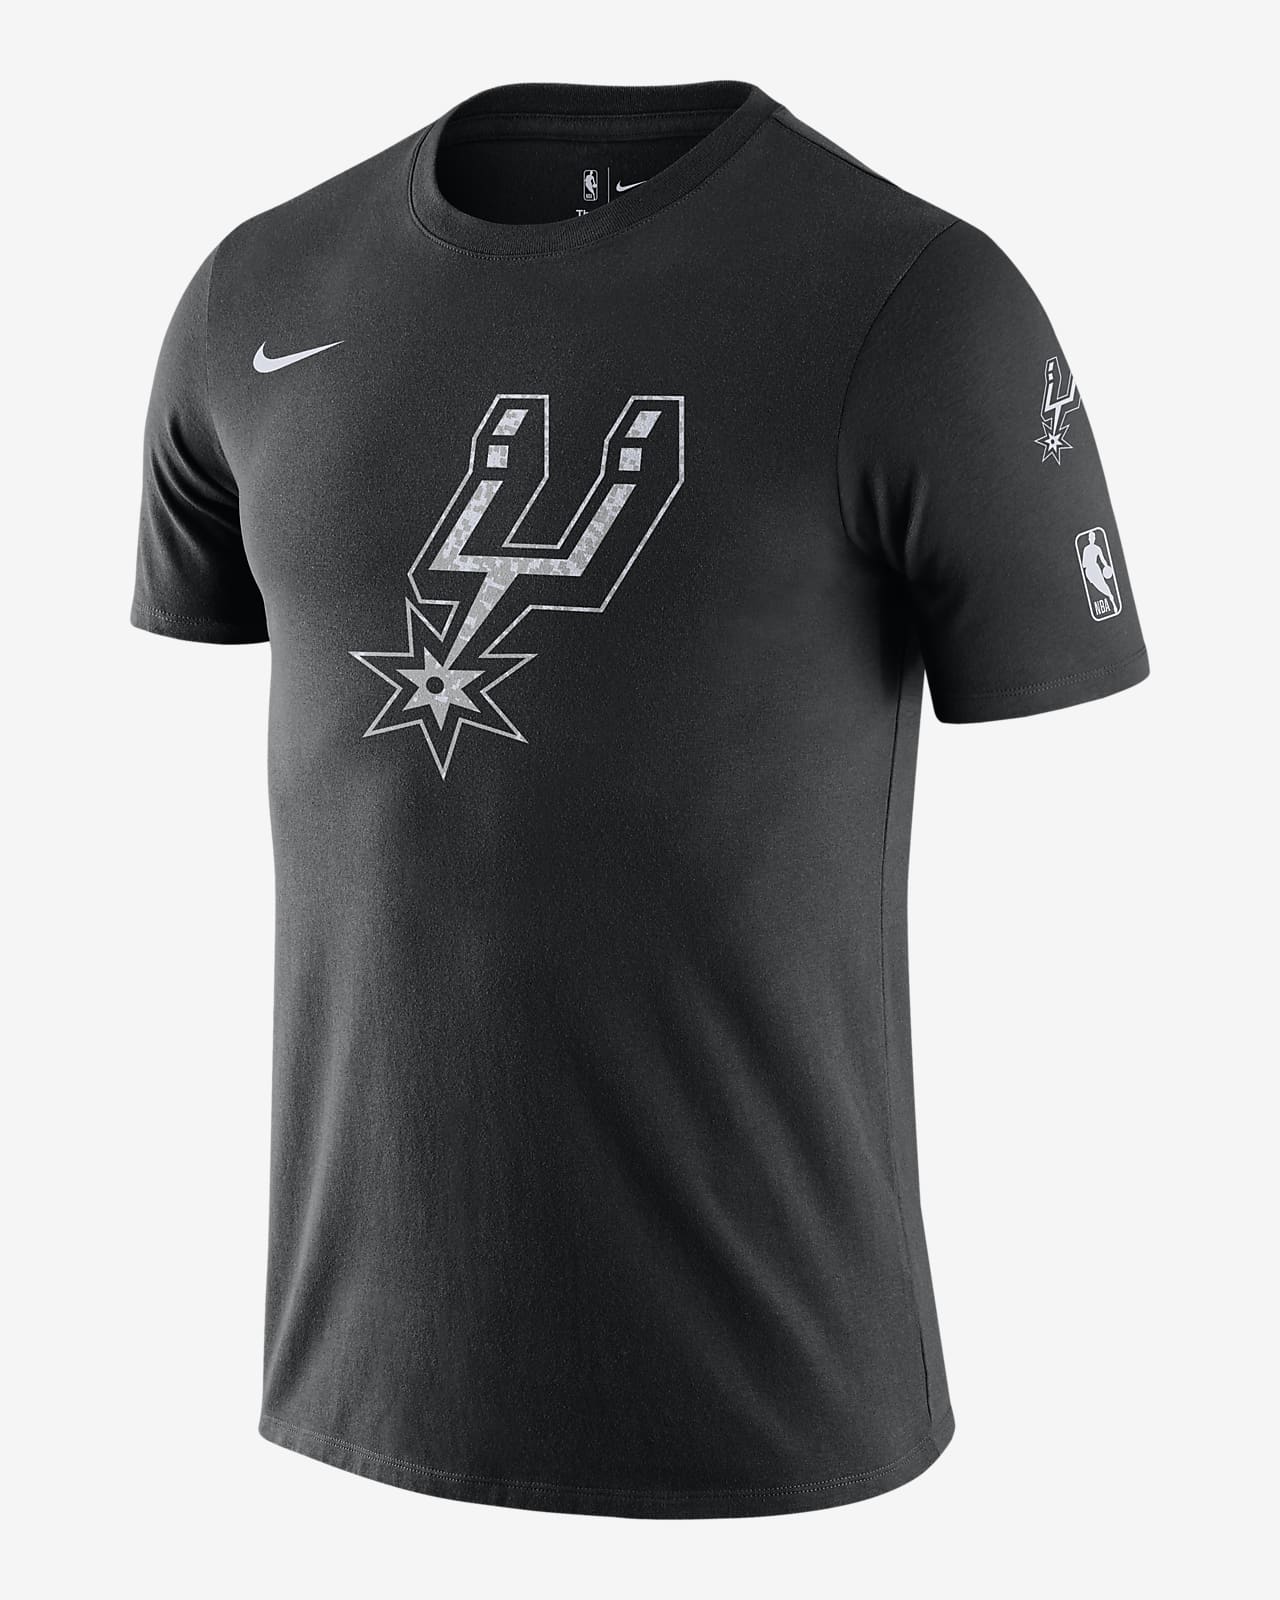 San Antonio Spurs Essential Men's Nike NBA T-Shirt